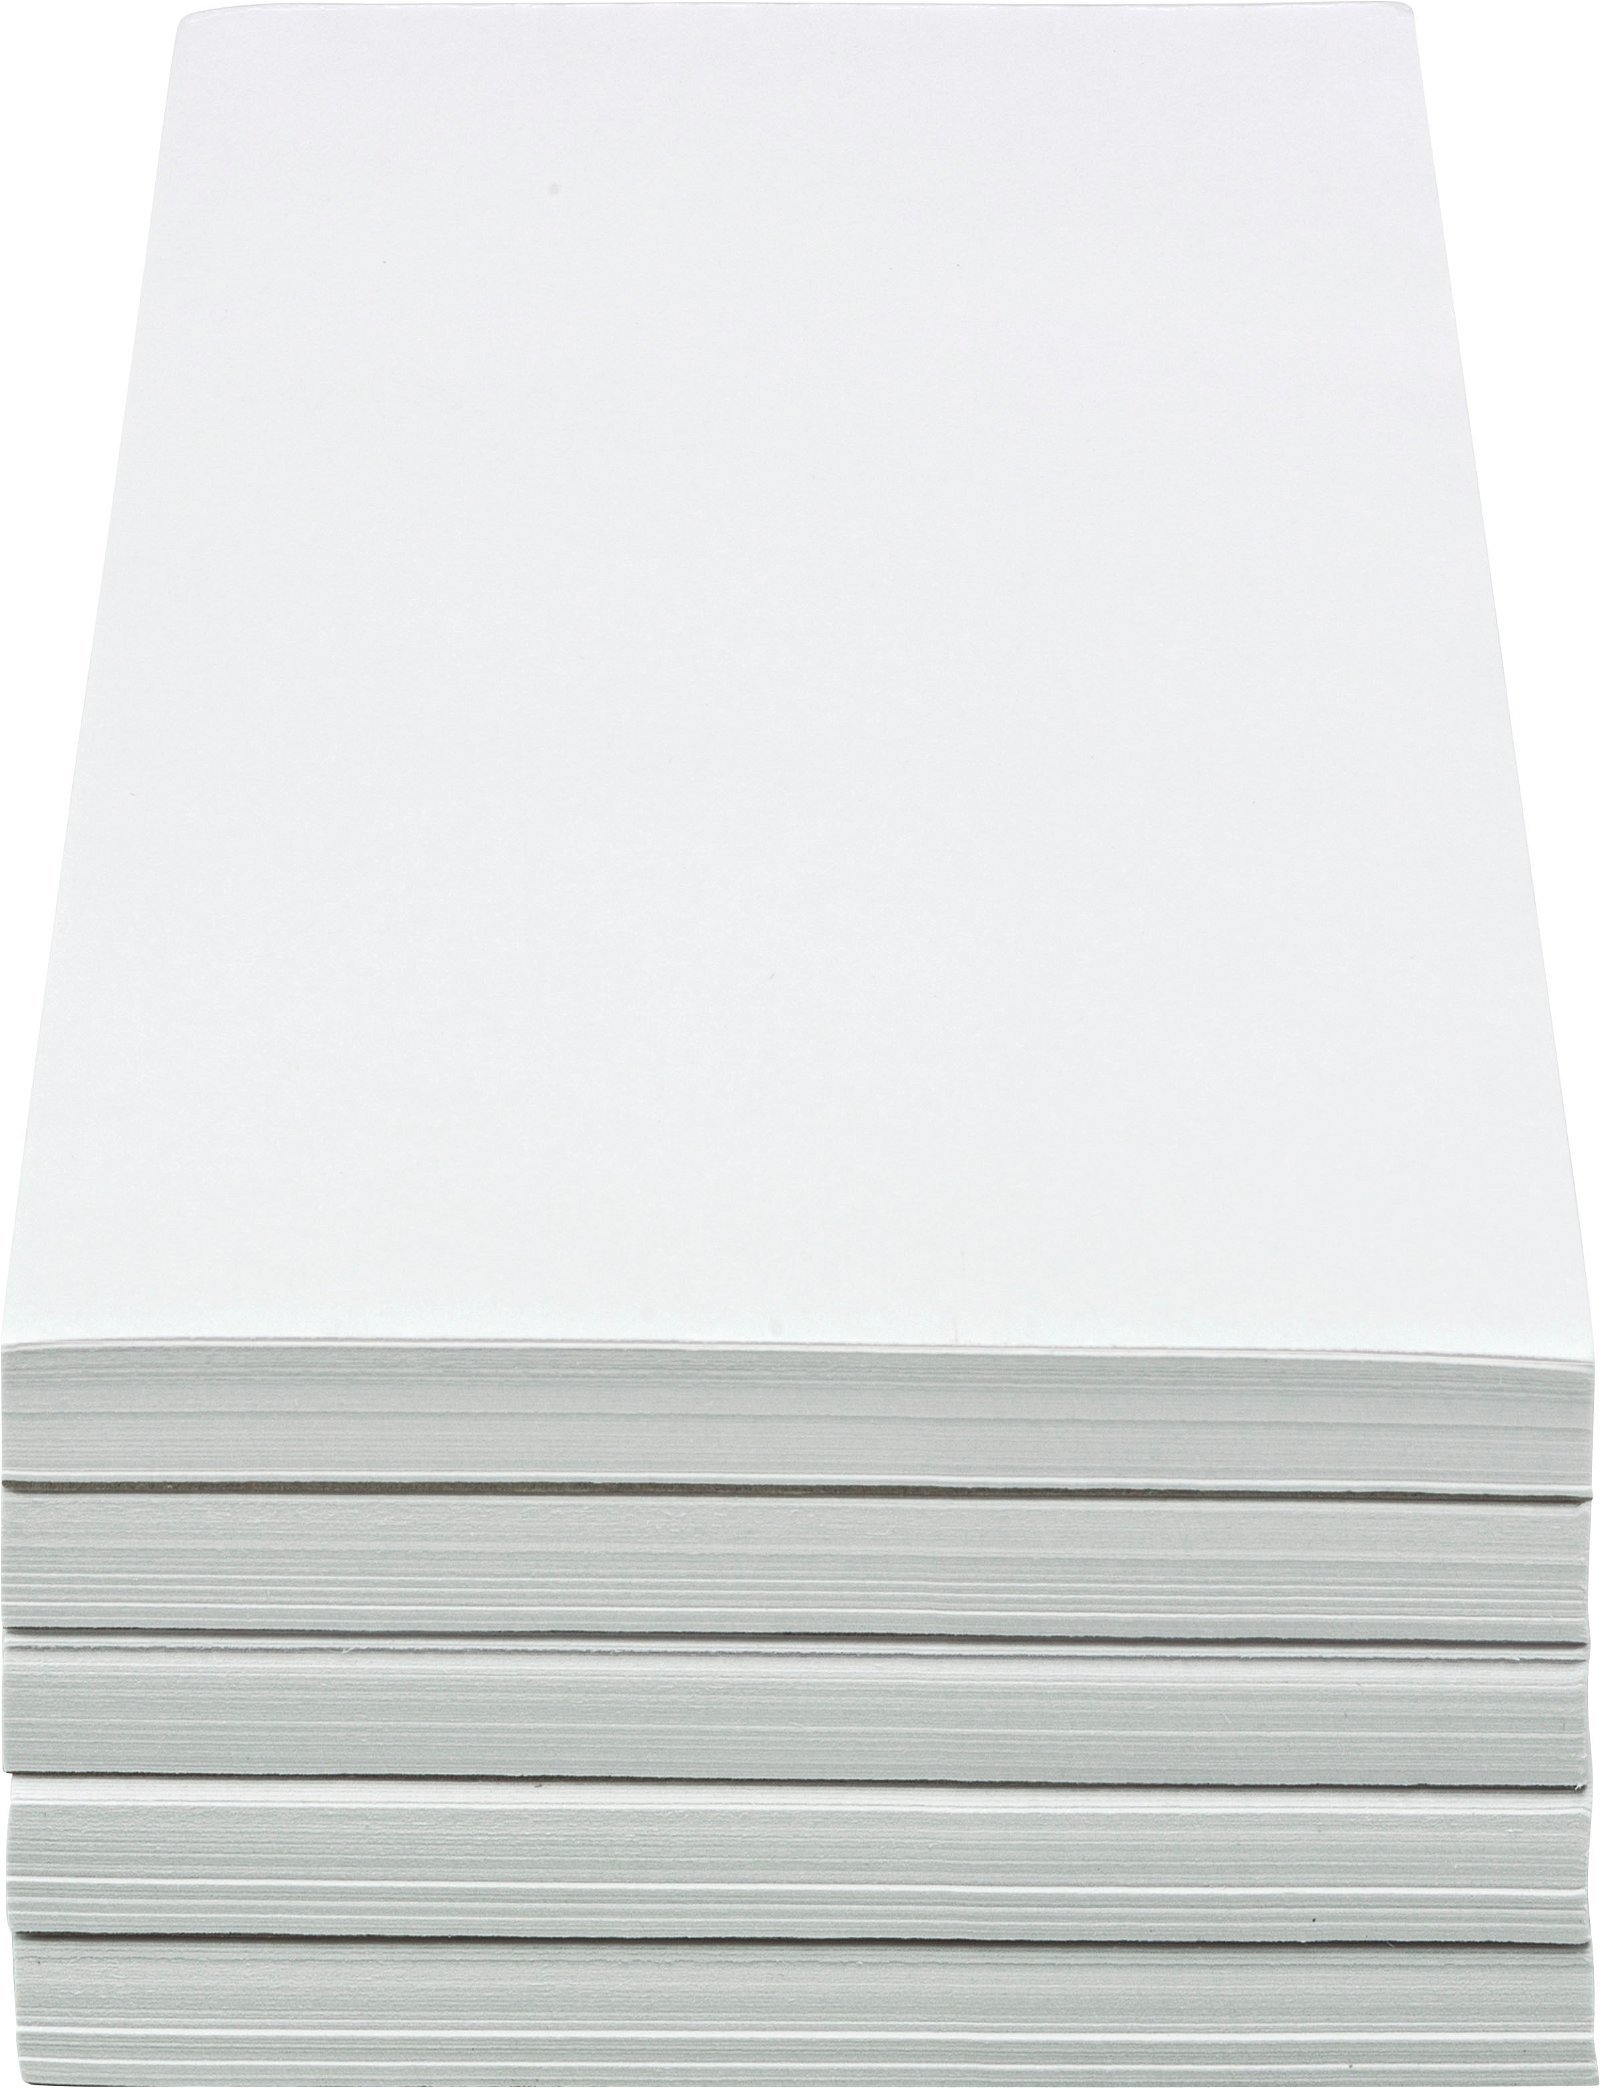 Bantex toplimet notesblok A6 ulinieret 100 ark hvid 60 g